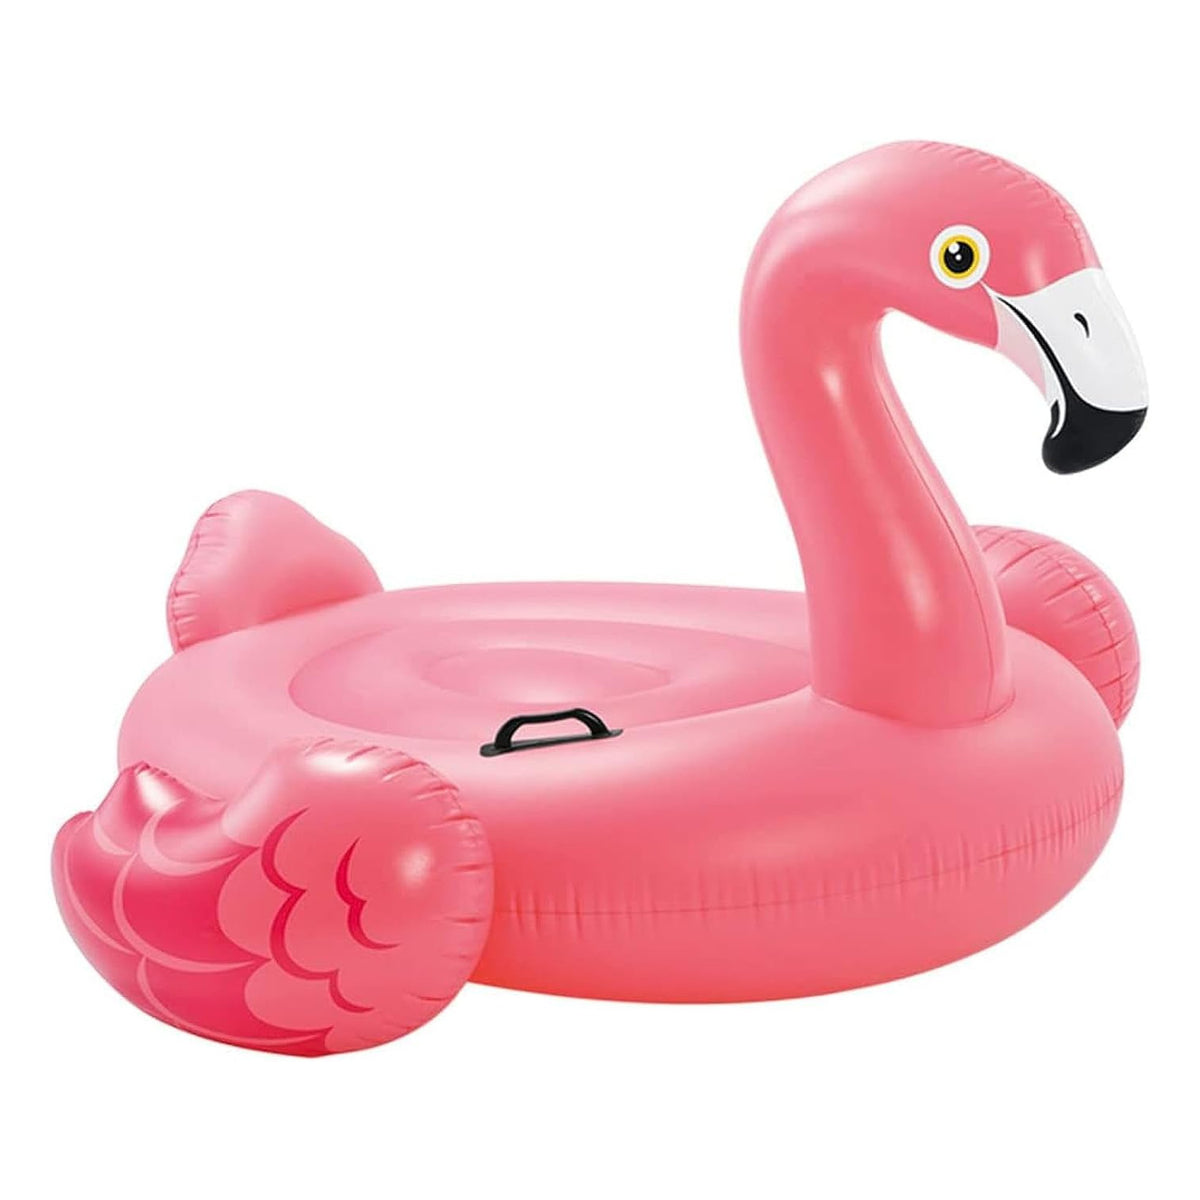 Intex Schwimmtier - Flamingo 147x140cm